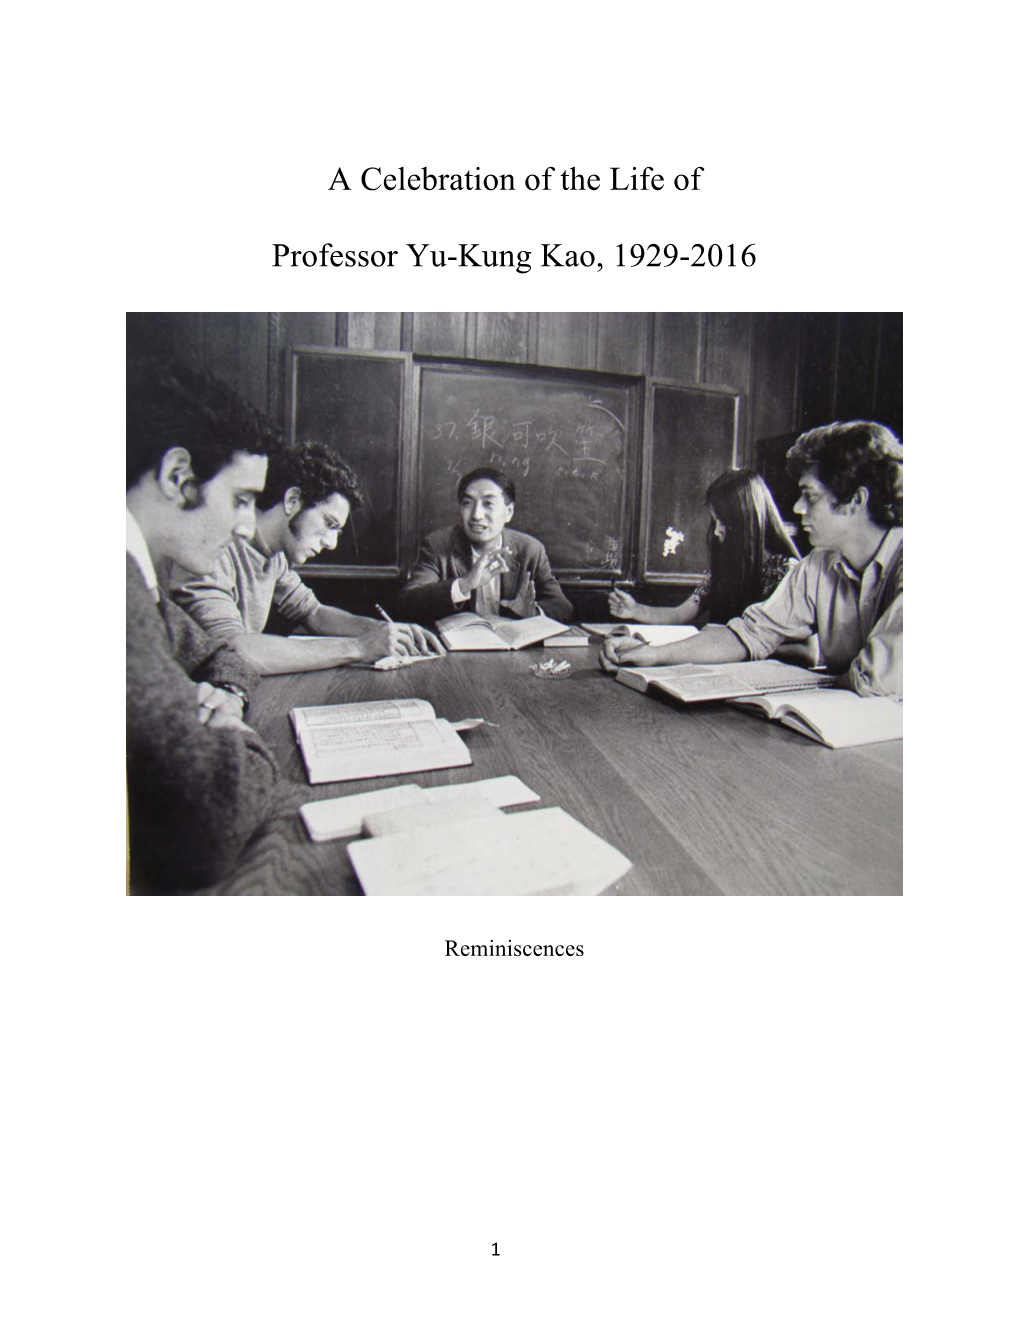 A Celebration of the Life of Professor Yu-Kung Kao, 1929-2016